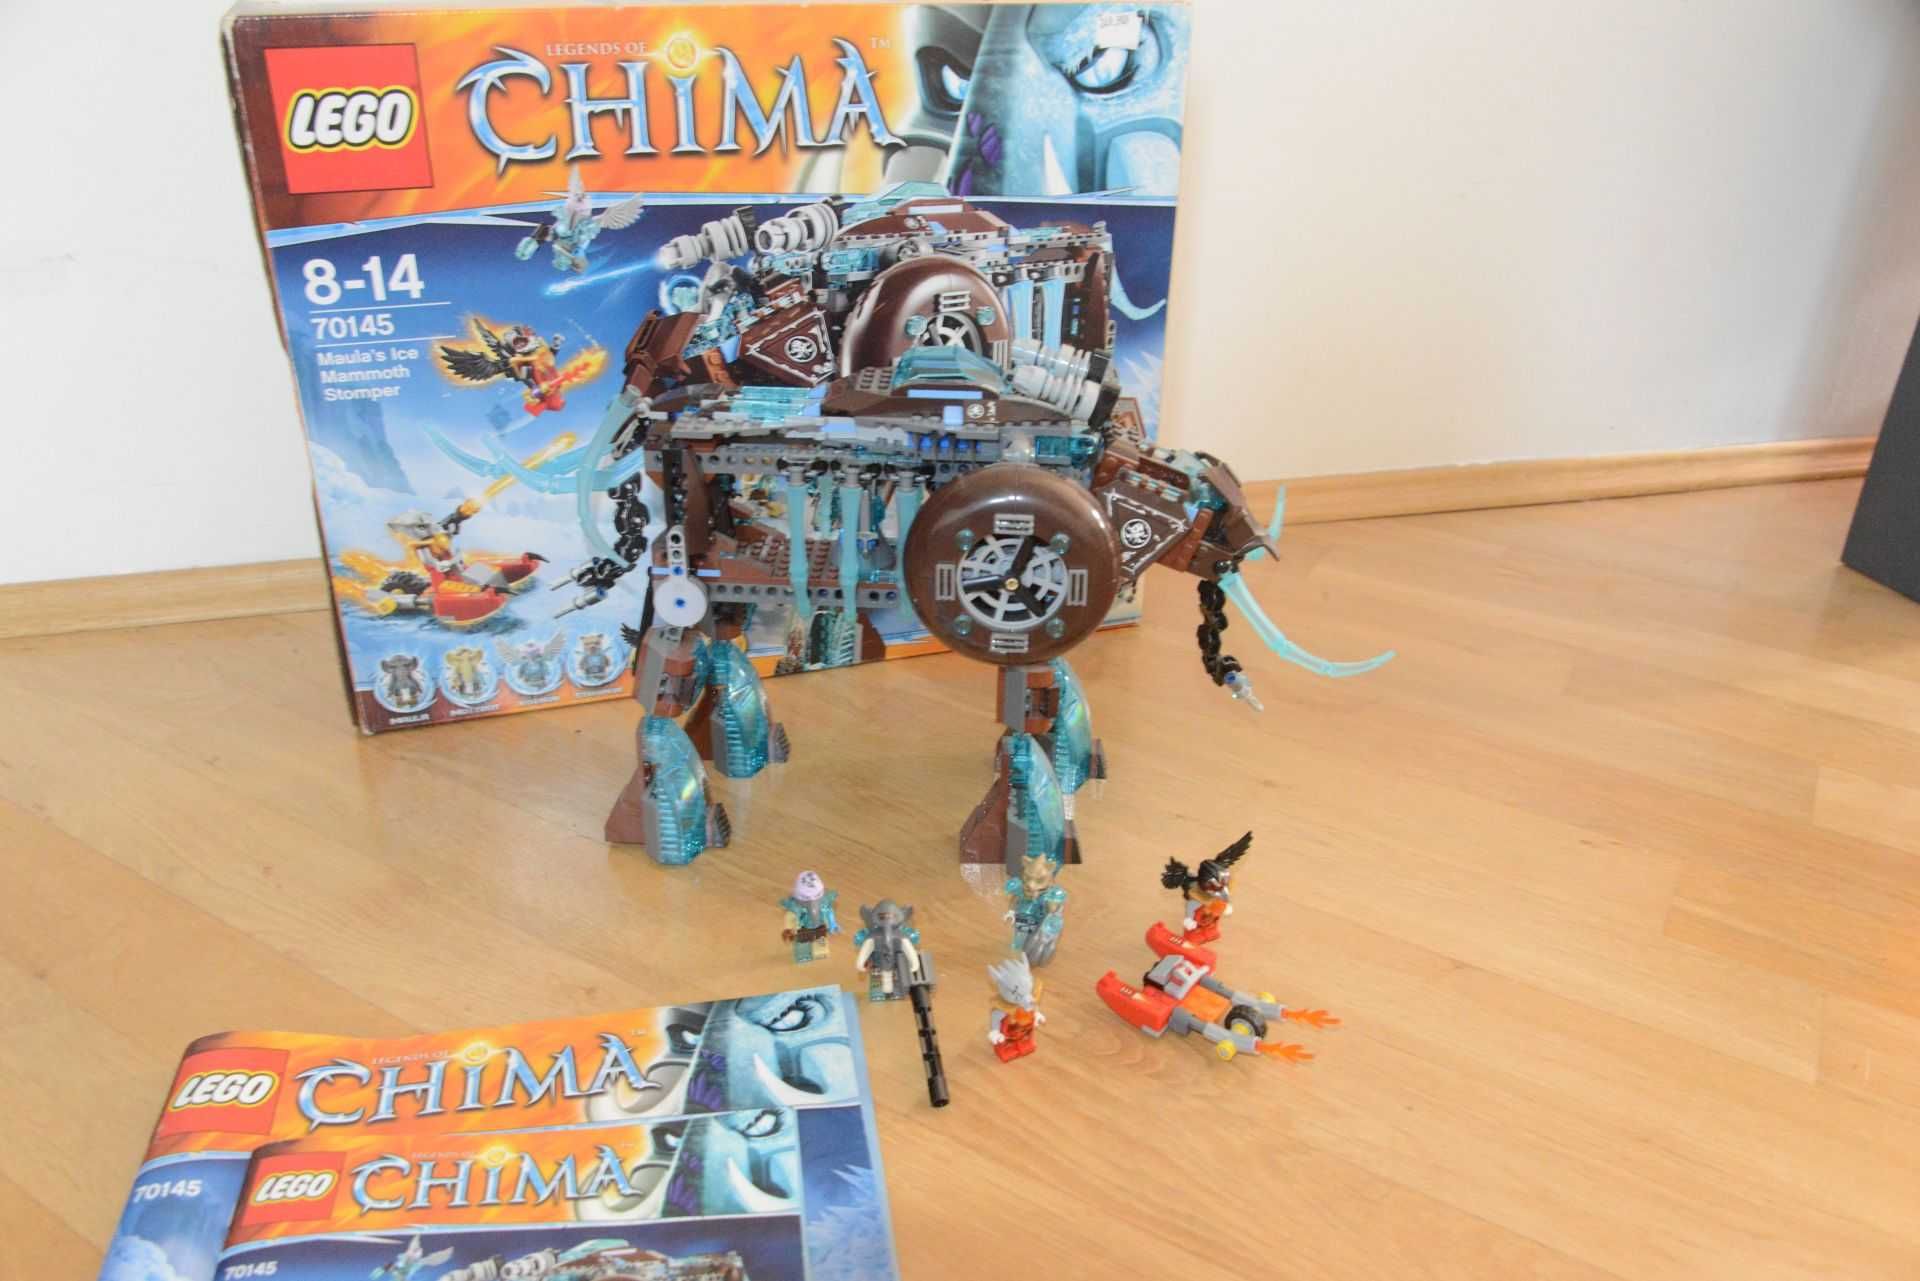 LEGO Chima 70145